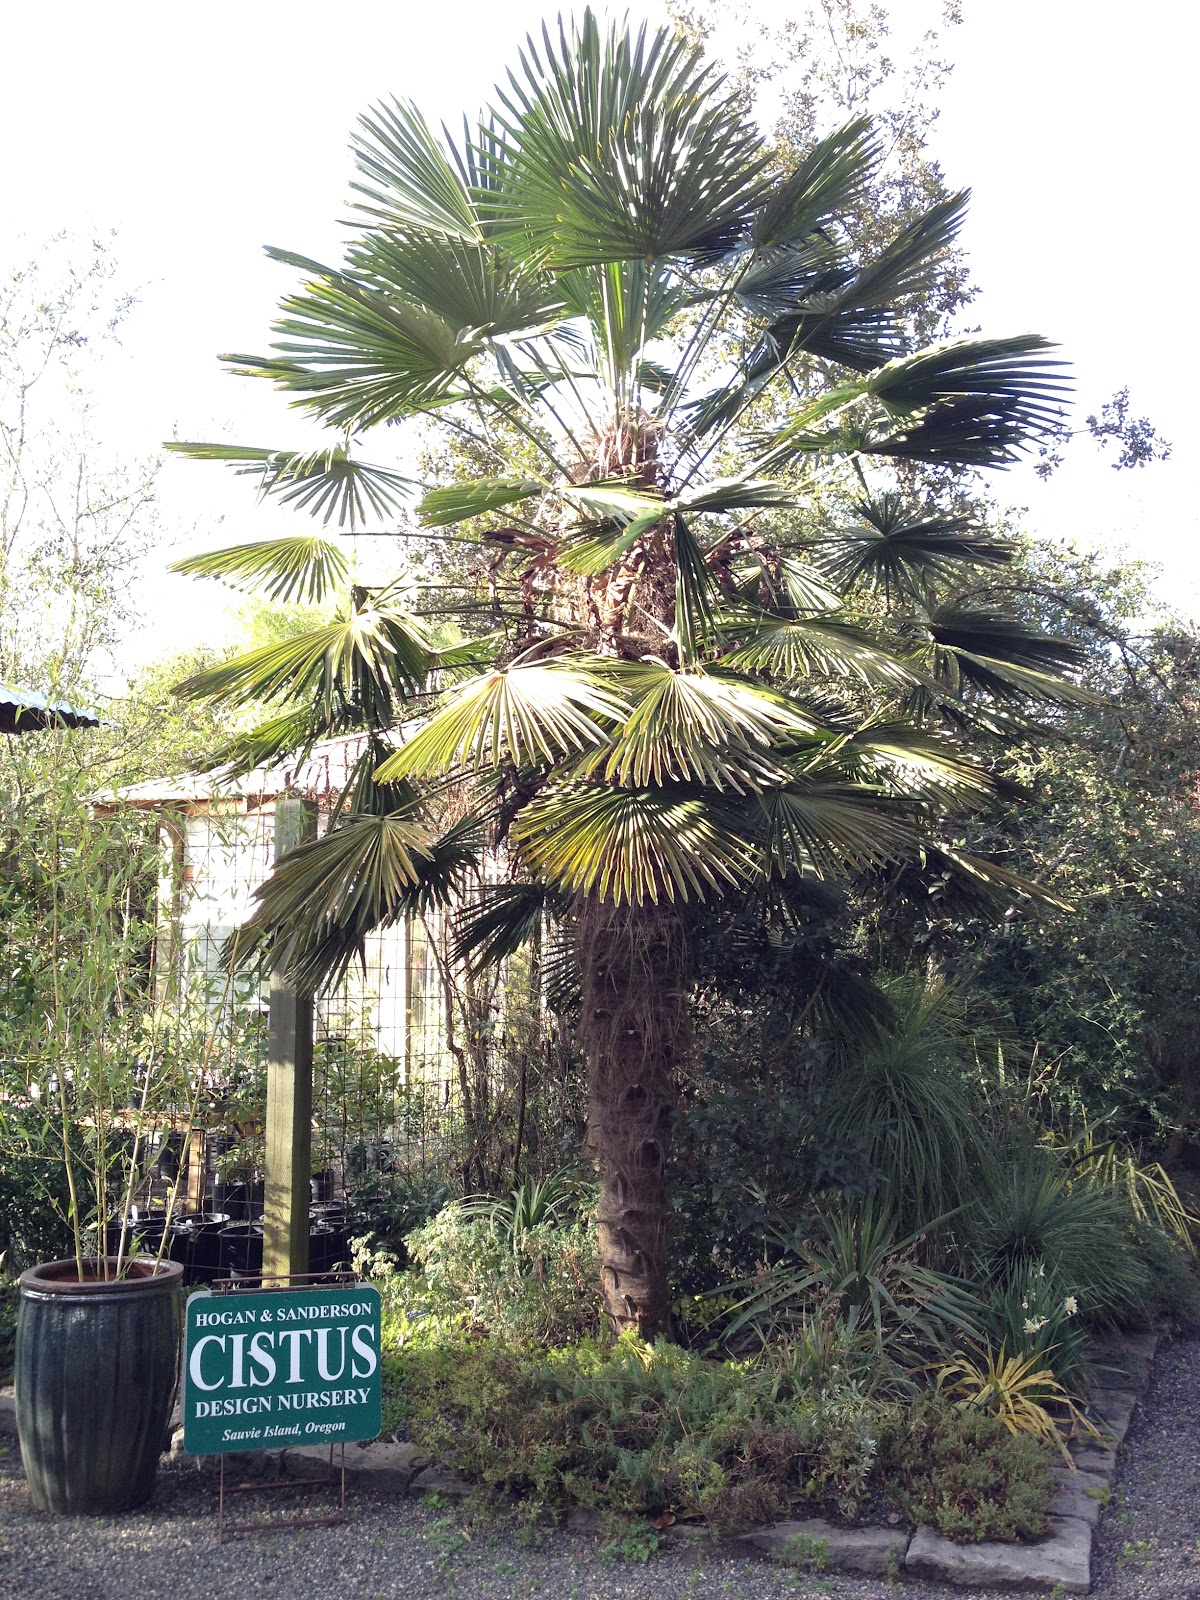 A palm tree in a cistus nursery garden.